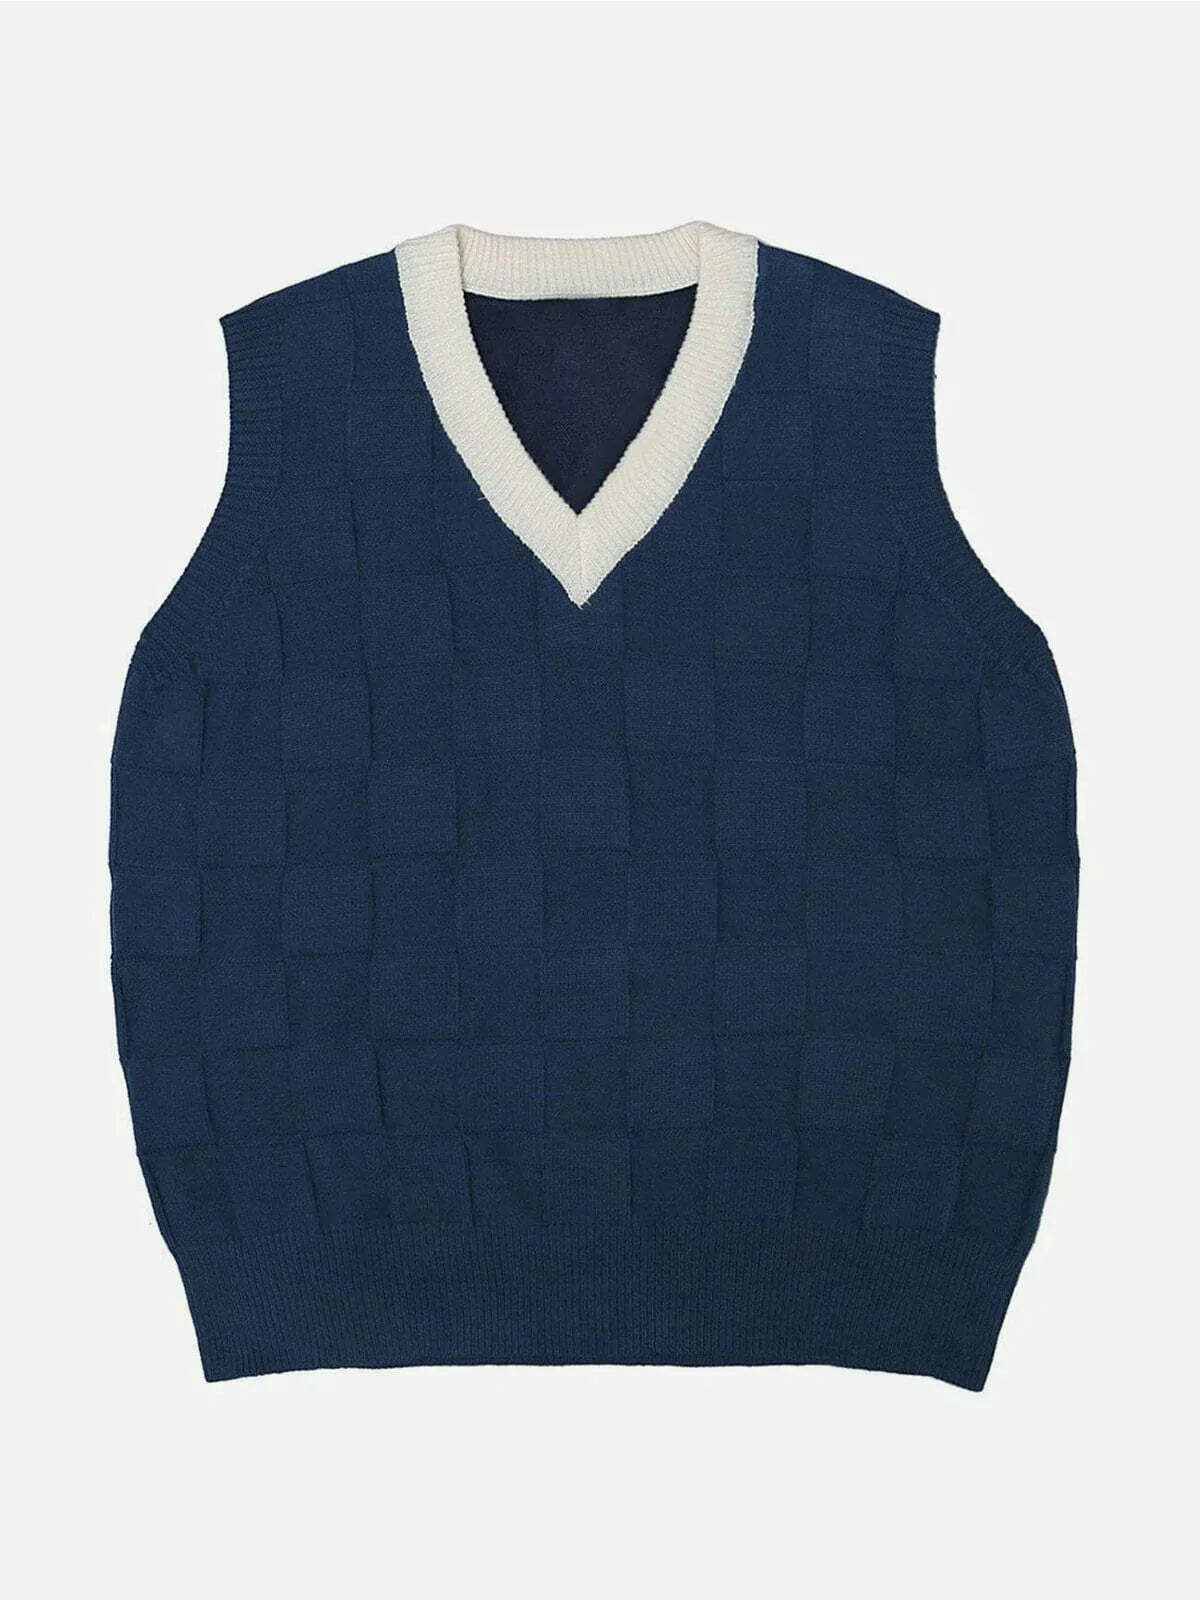 lattice sweater vest retro streetwear essential 1783